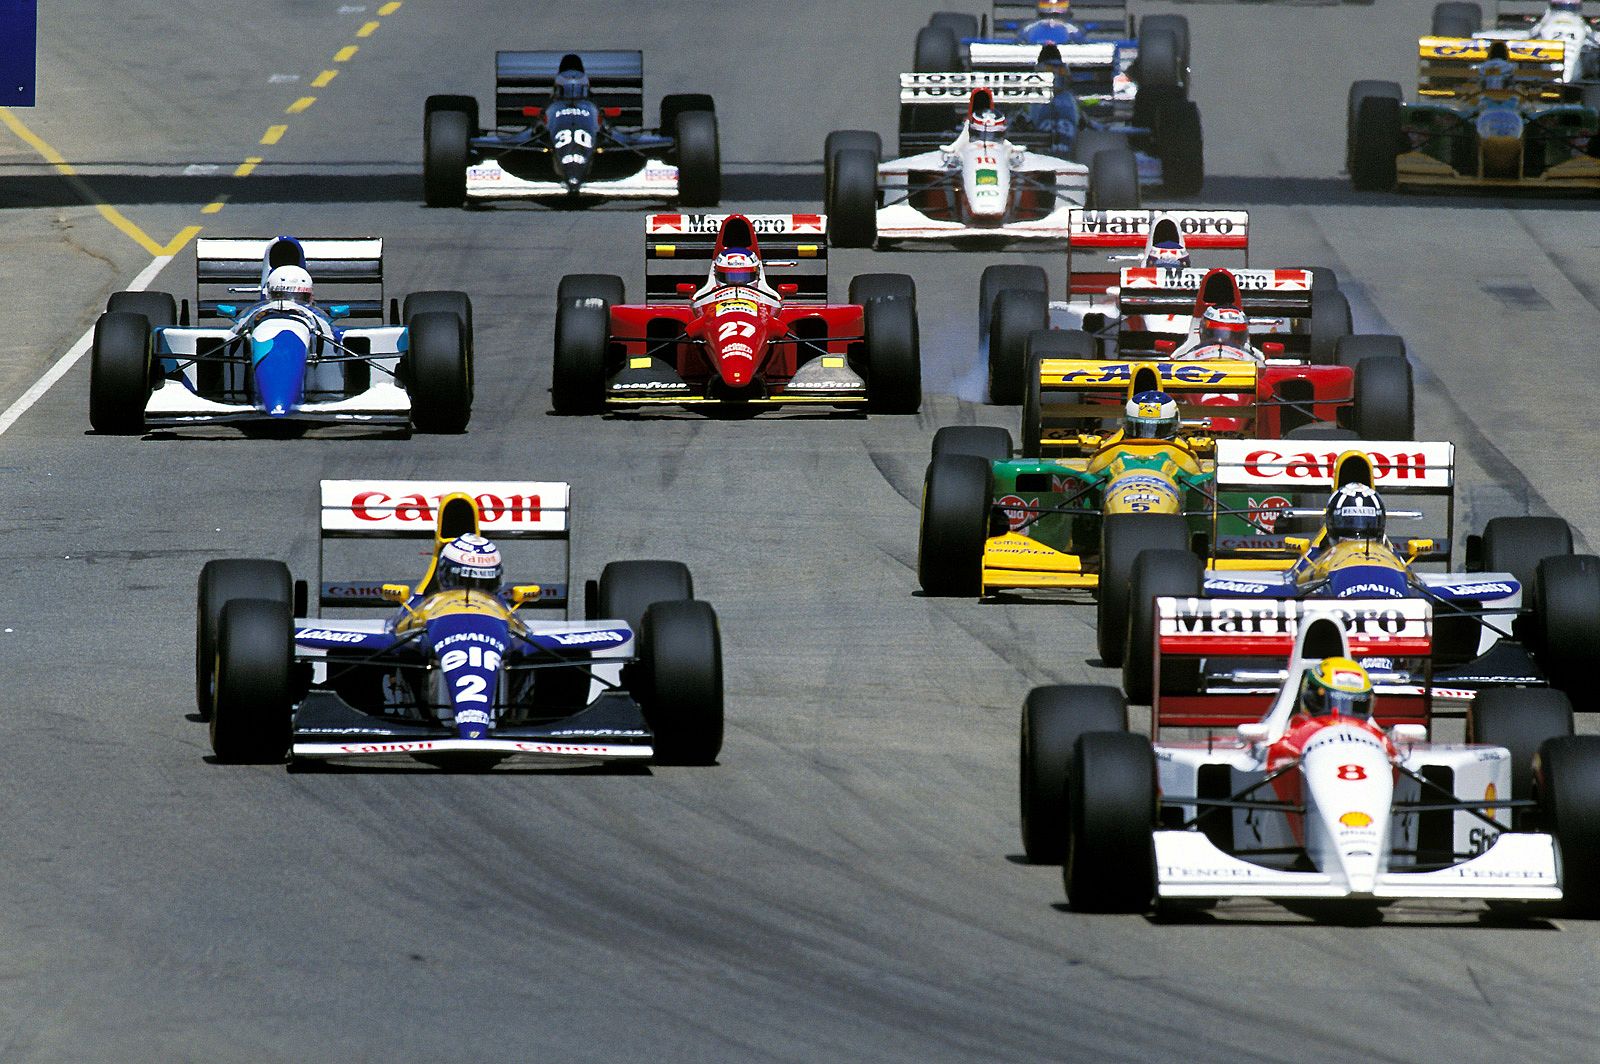 01 01 1993. Формула 1 1993. Prost f1 1996. Prost f1 1998. Williams f1 1993.